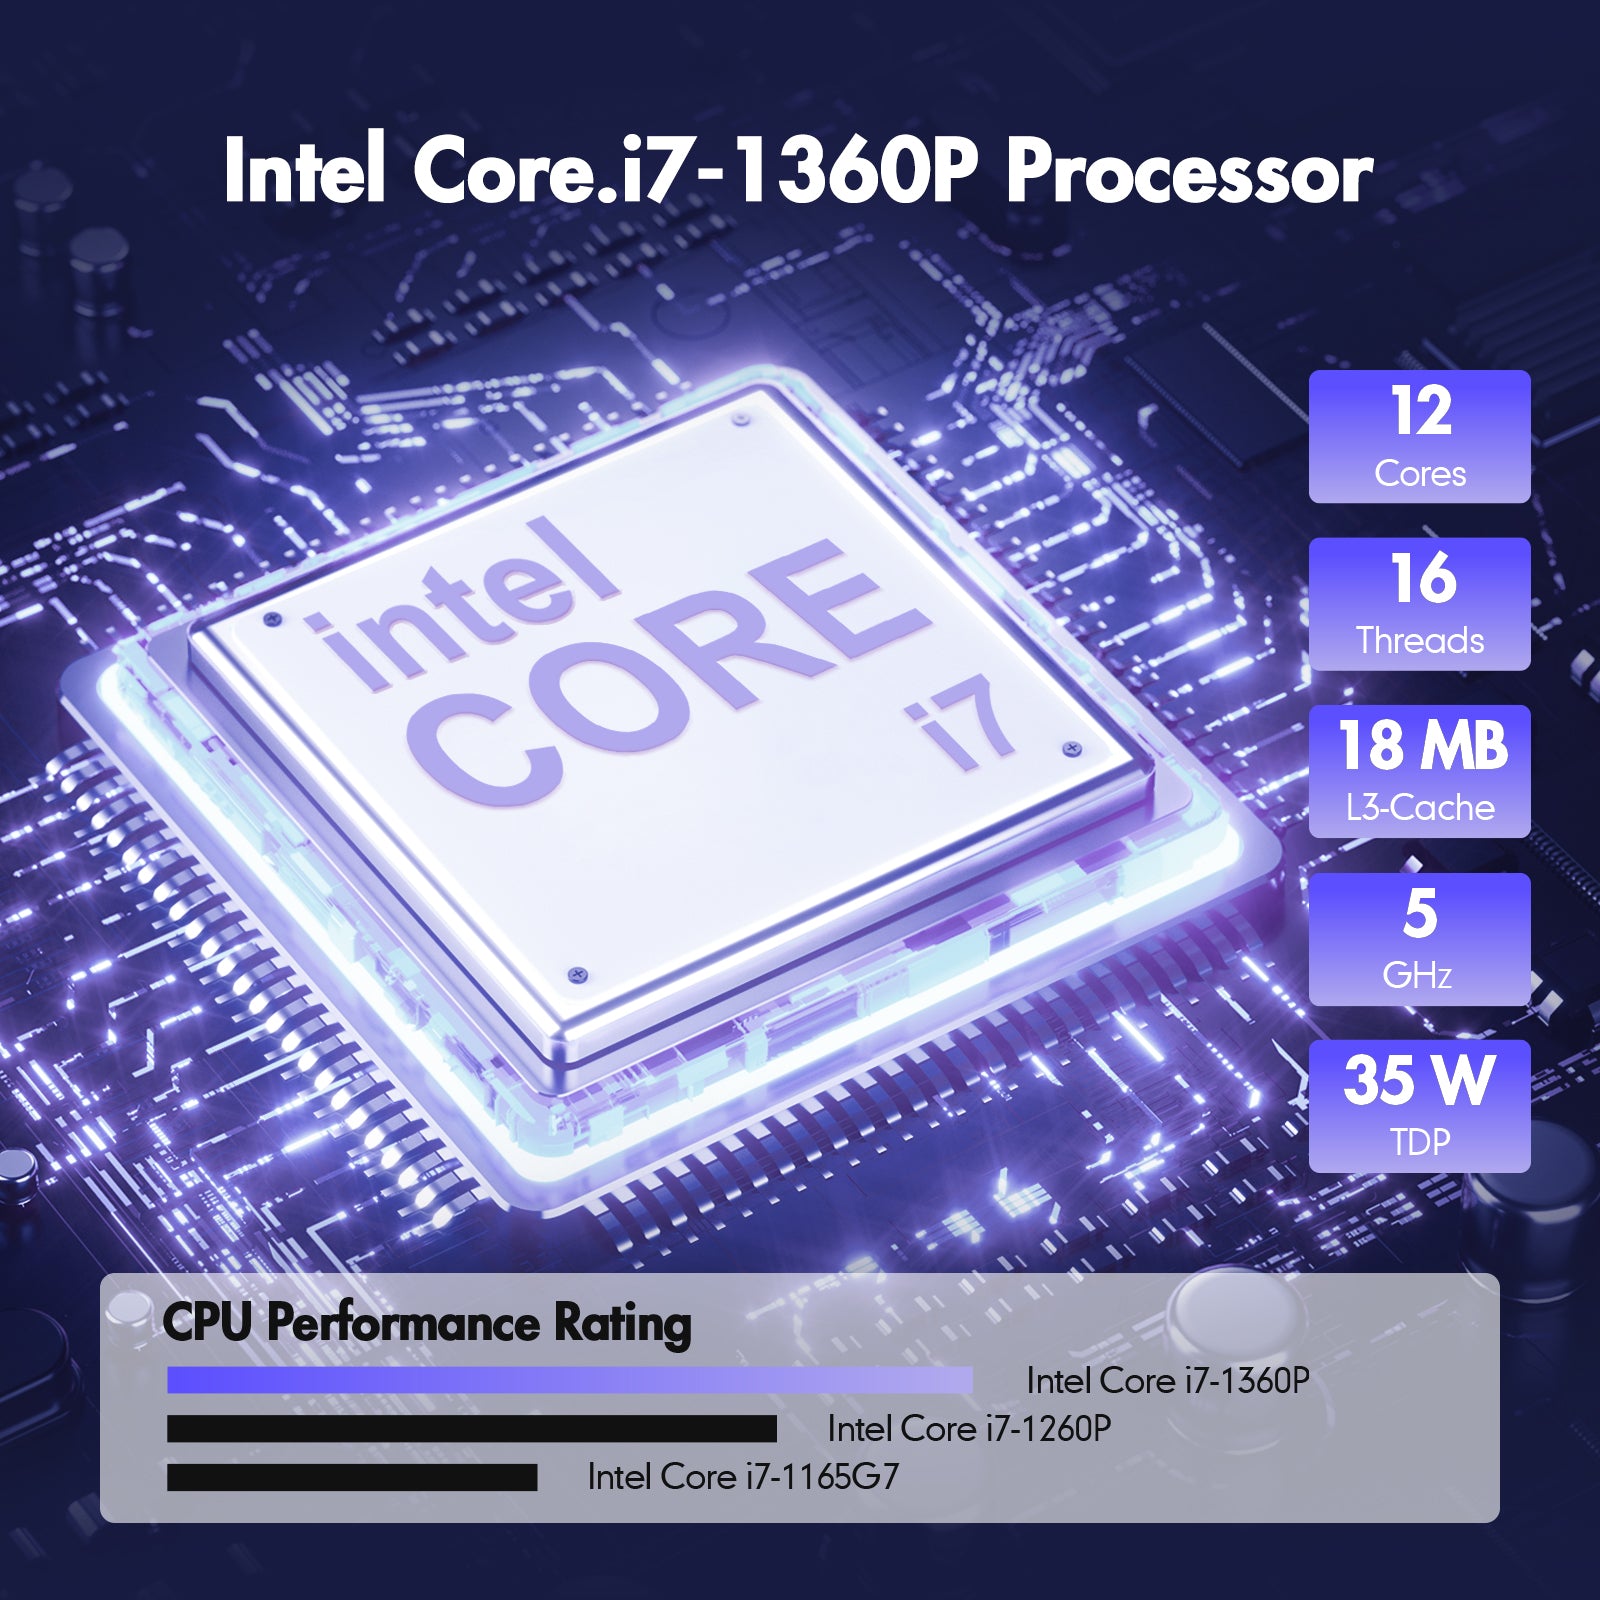 Intel NUC 13 Pro NUC13ANHI7